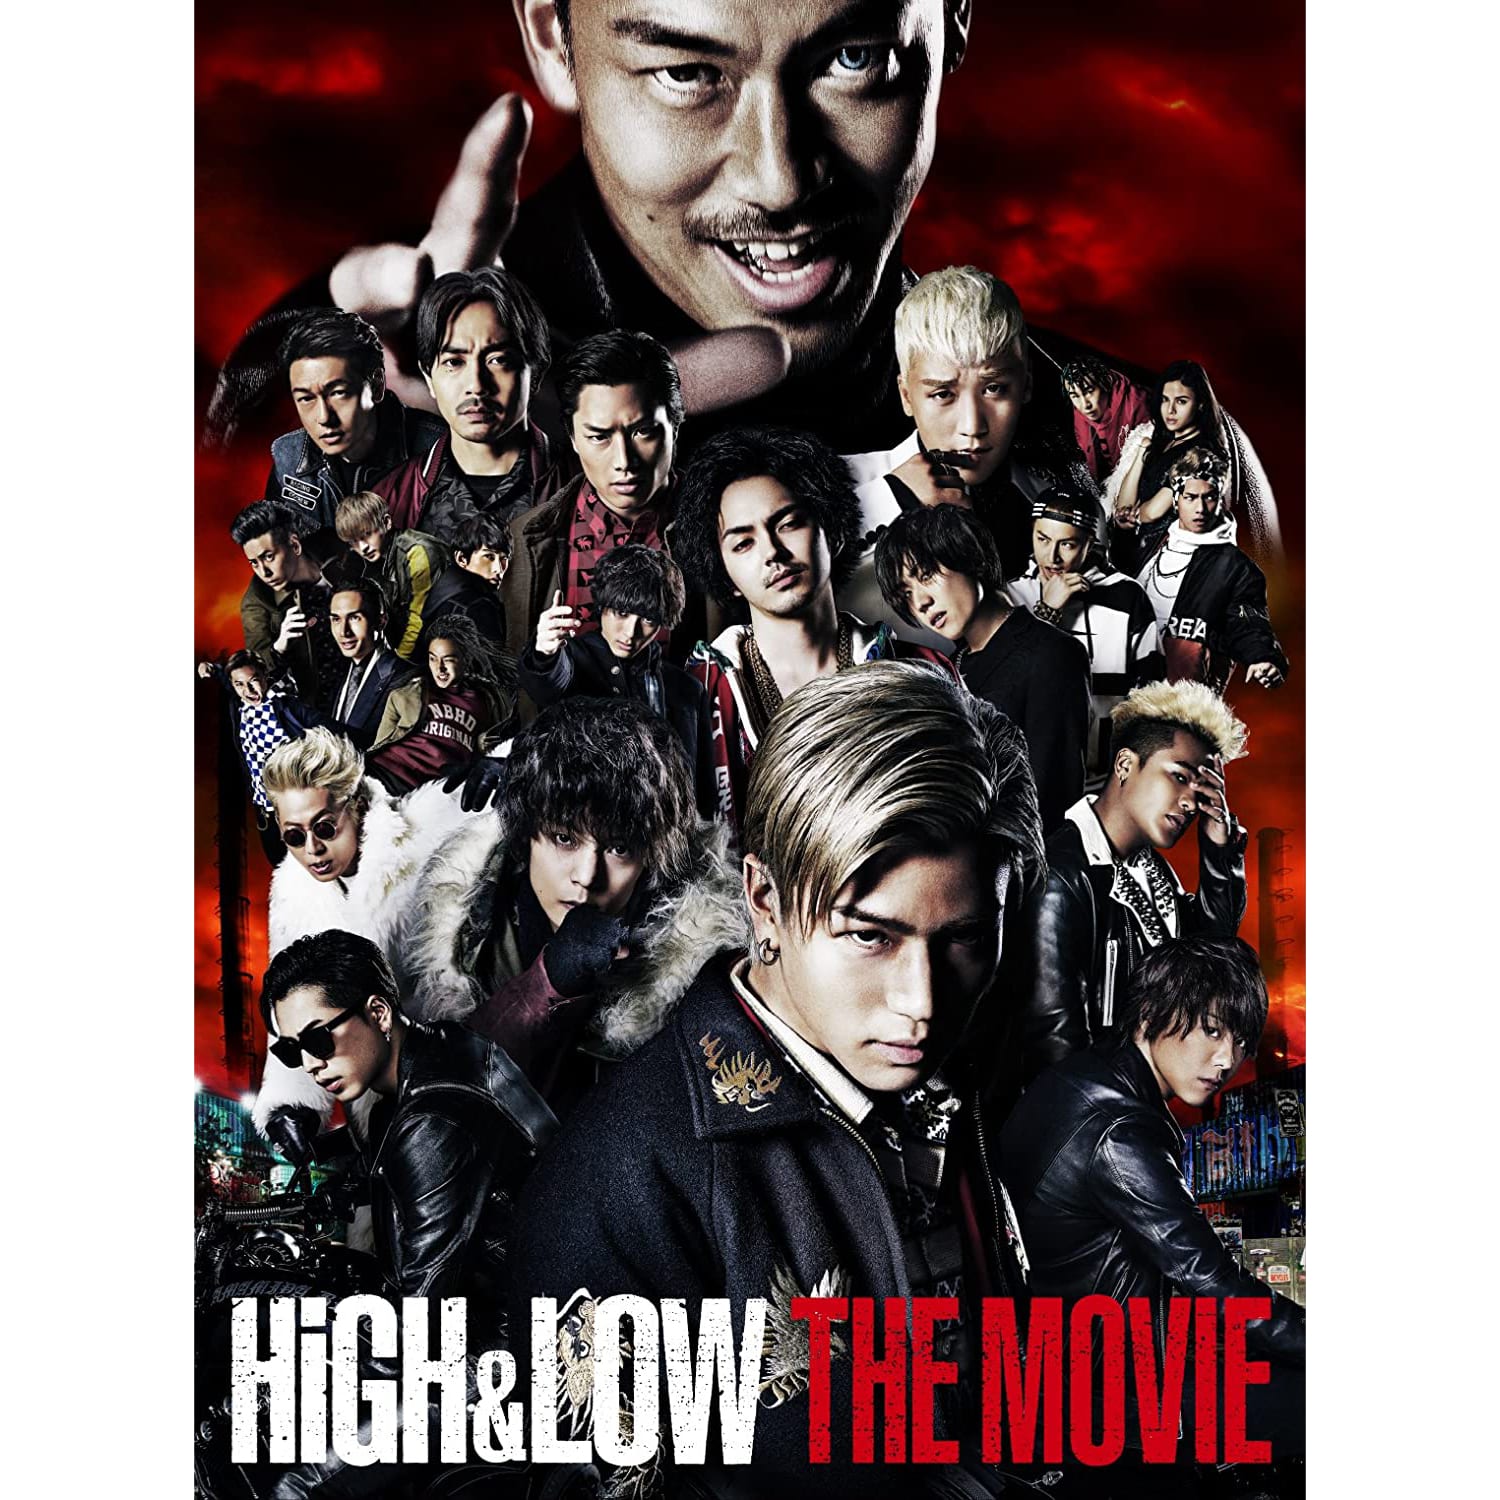 岩田剛典high &low DVD box